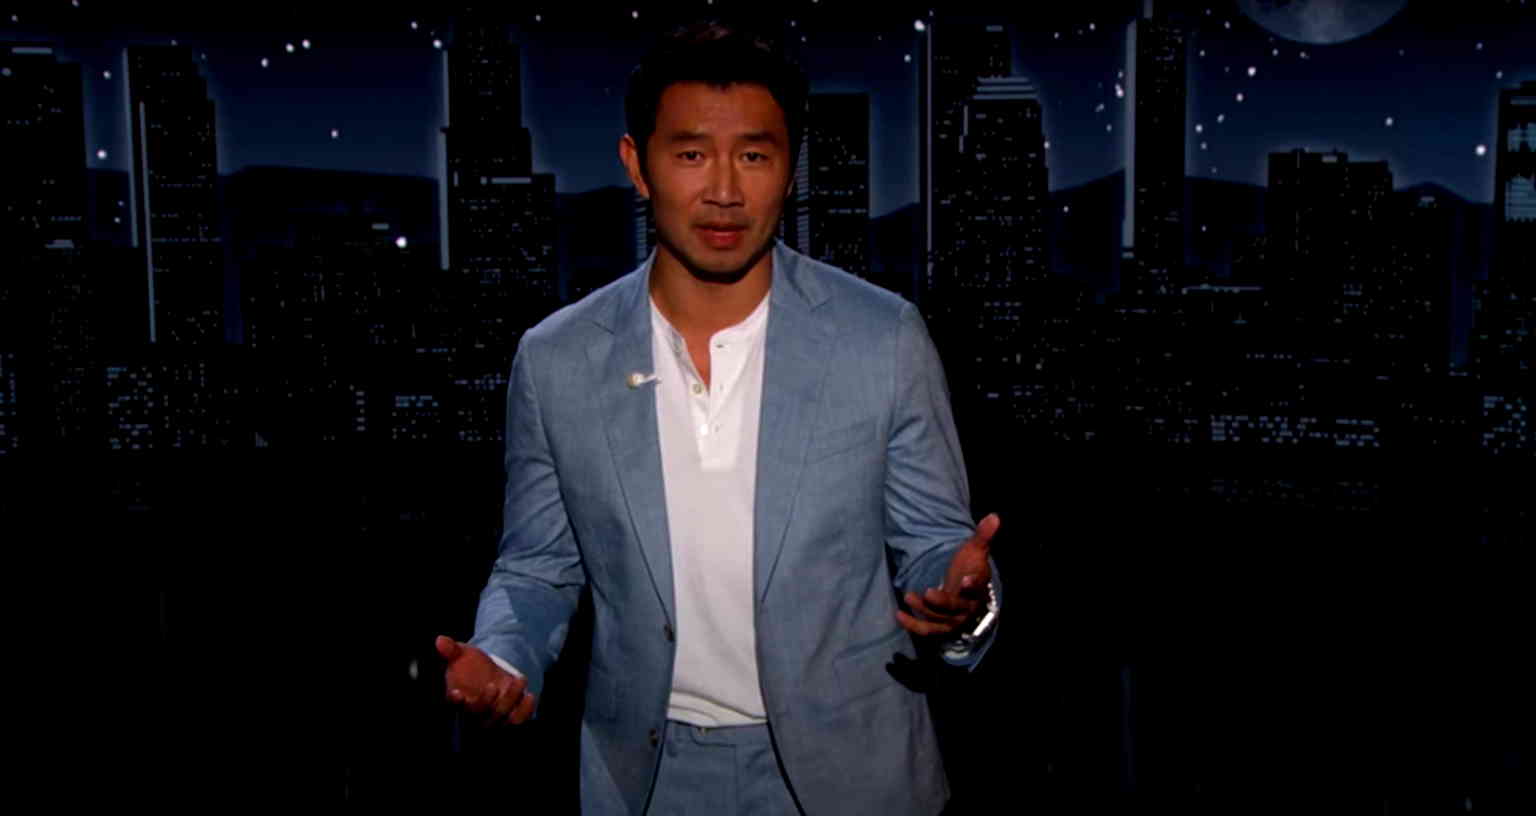 ‘Asian takeover!’: Simu Liu and Jimmy O. Yang share dim sum on ‘Jimmy Kimmel Live!’